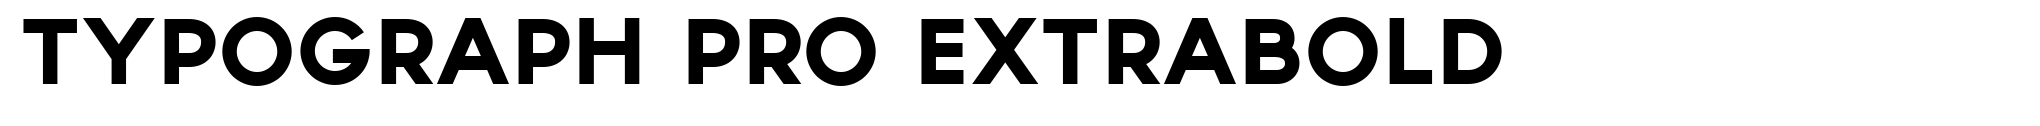 Typograph Pro ExtraBold image